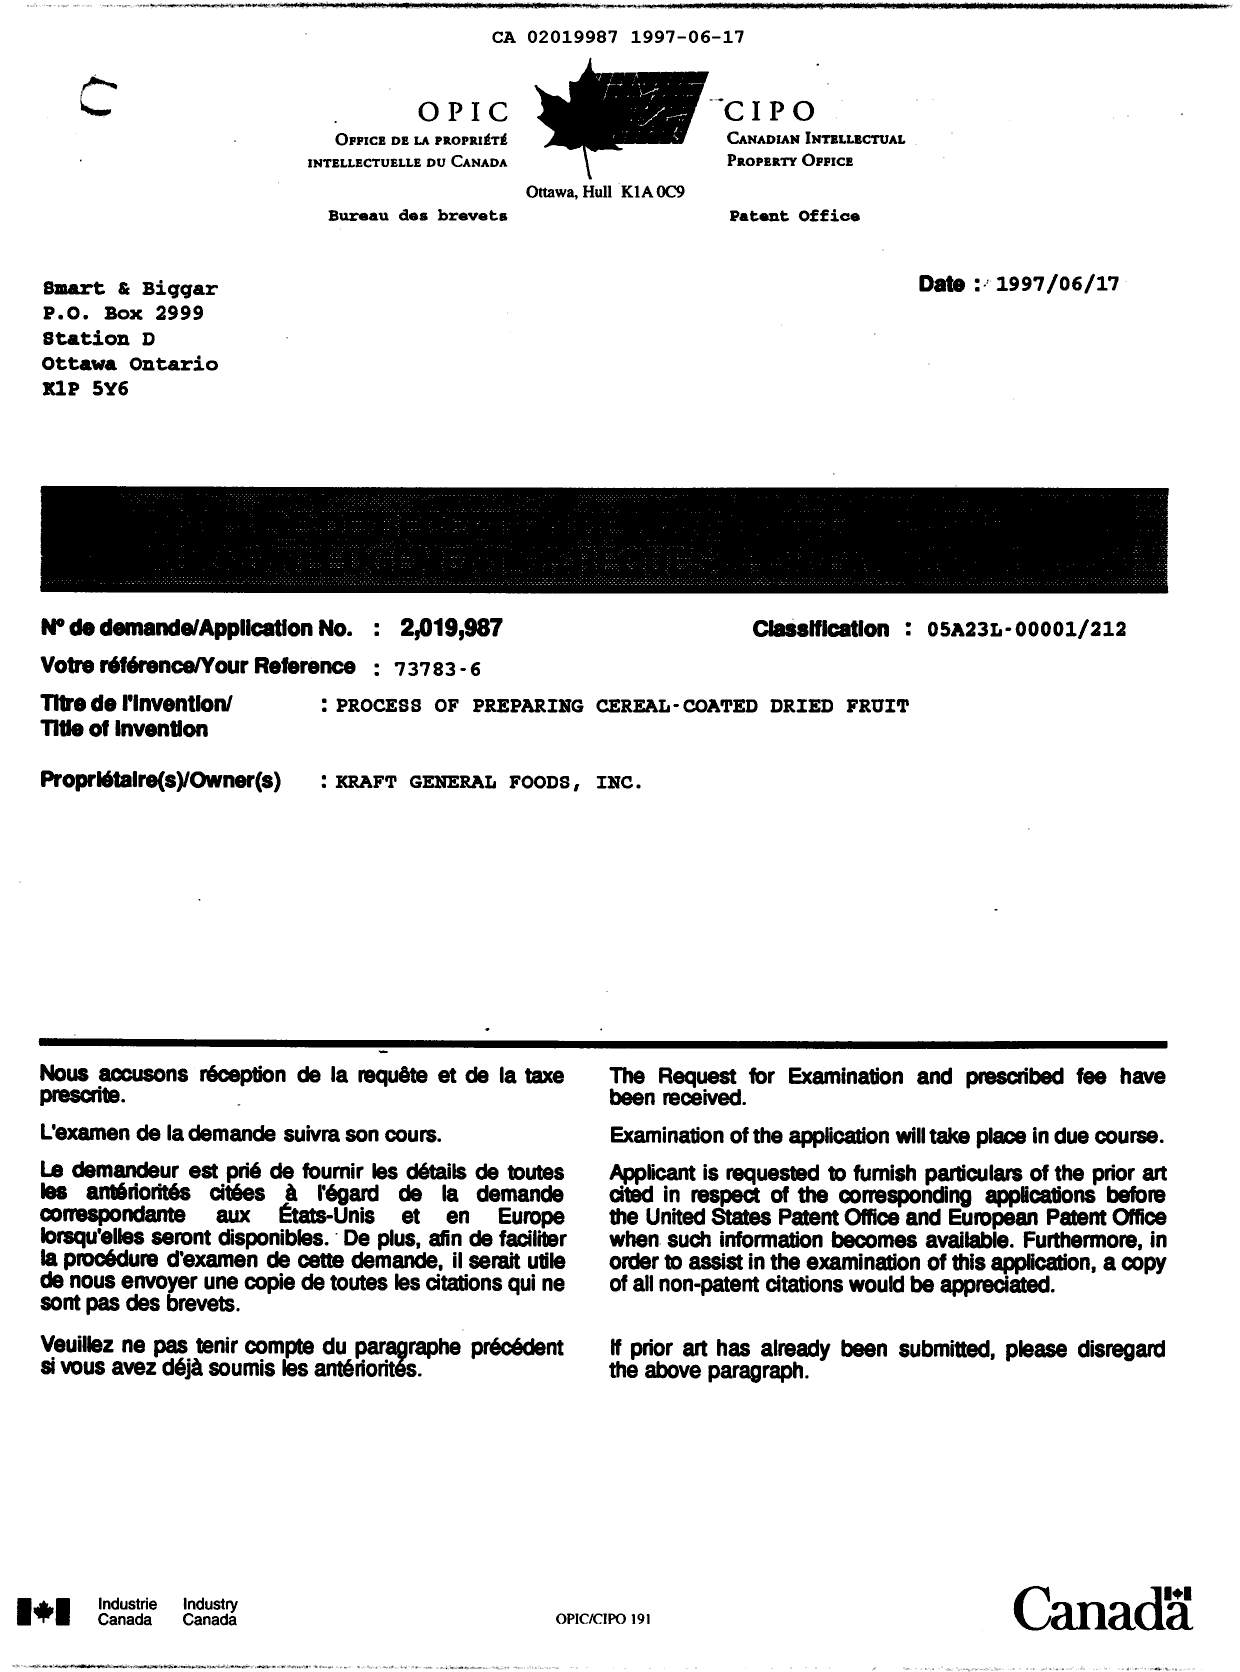 Canadian Patent Document 2019987. Correspondence 19970617. Image 1 of 1